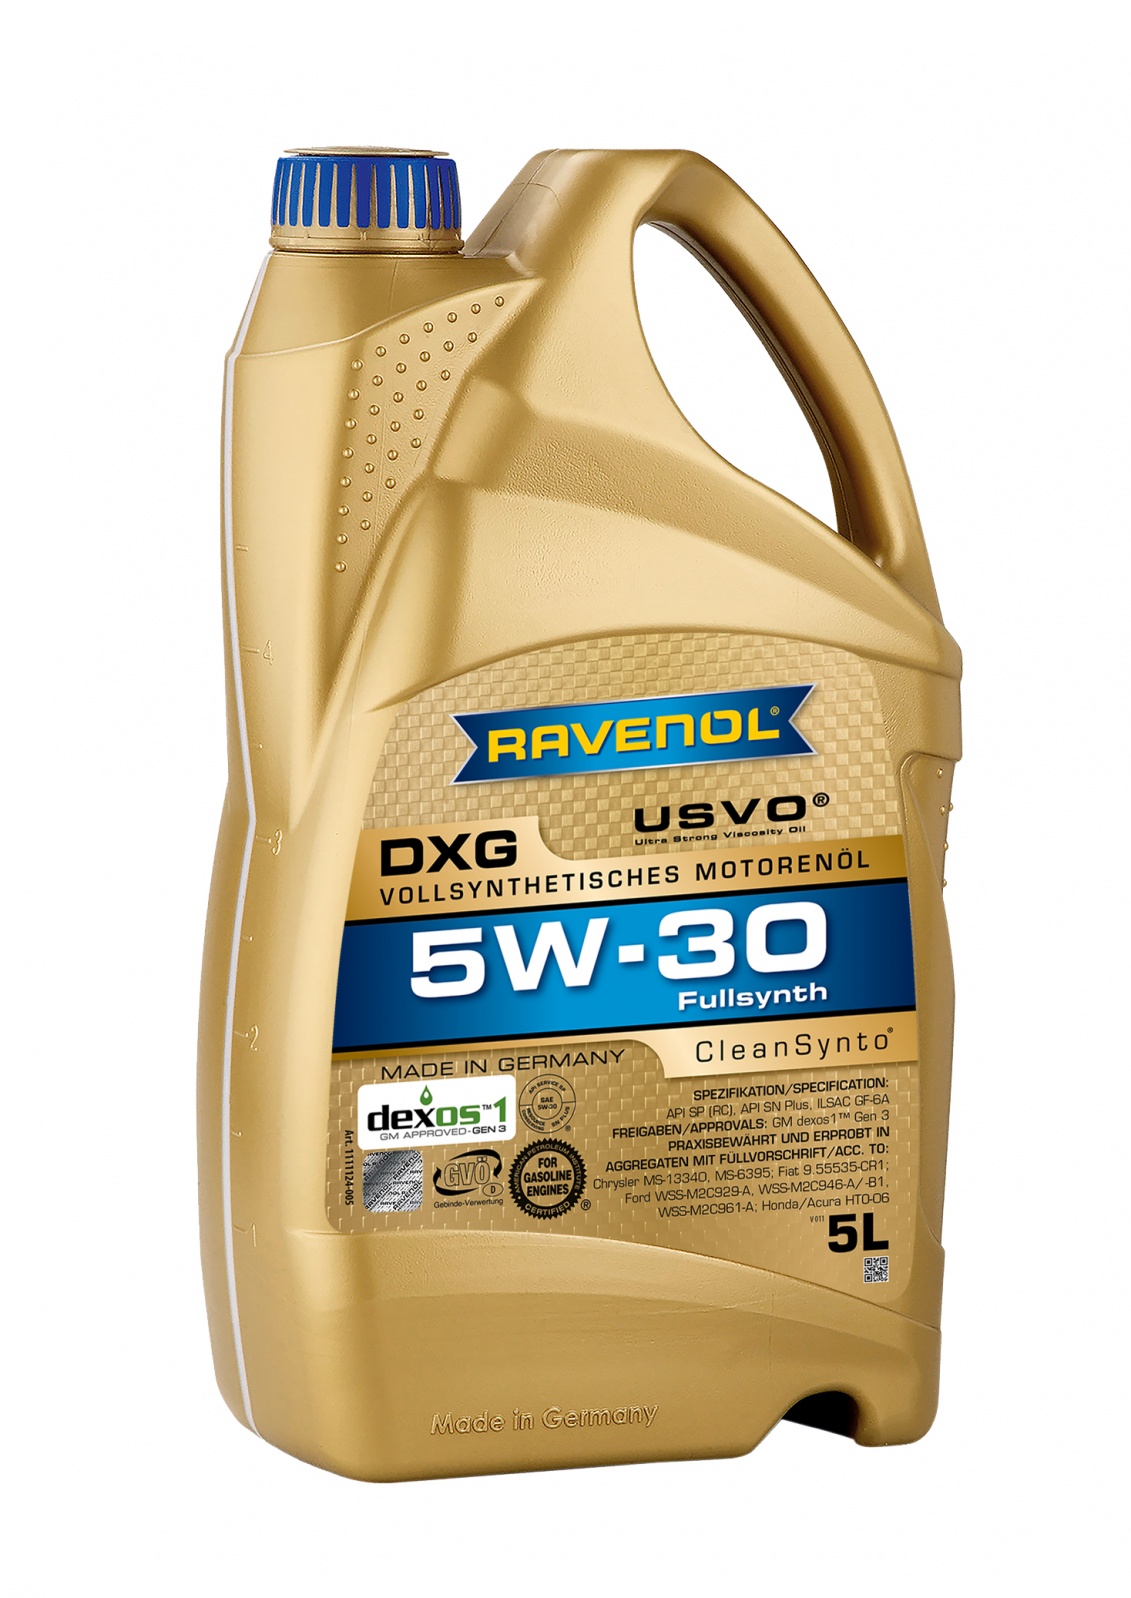 Ravenol UK - RAVENOL USVO DXG 5W-30 Engine Oil